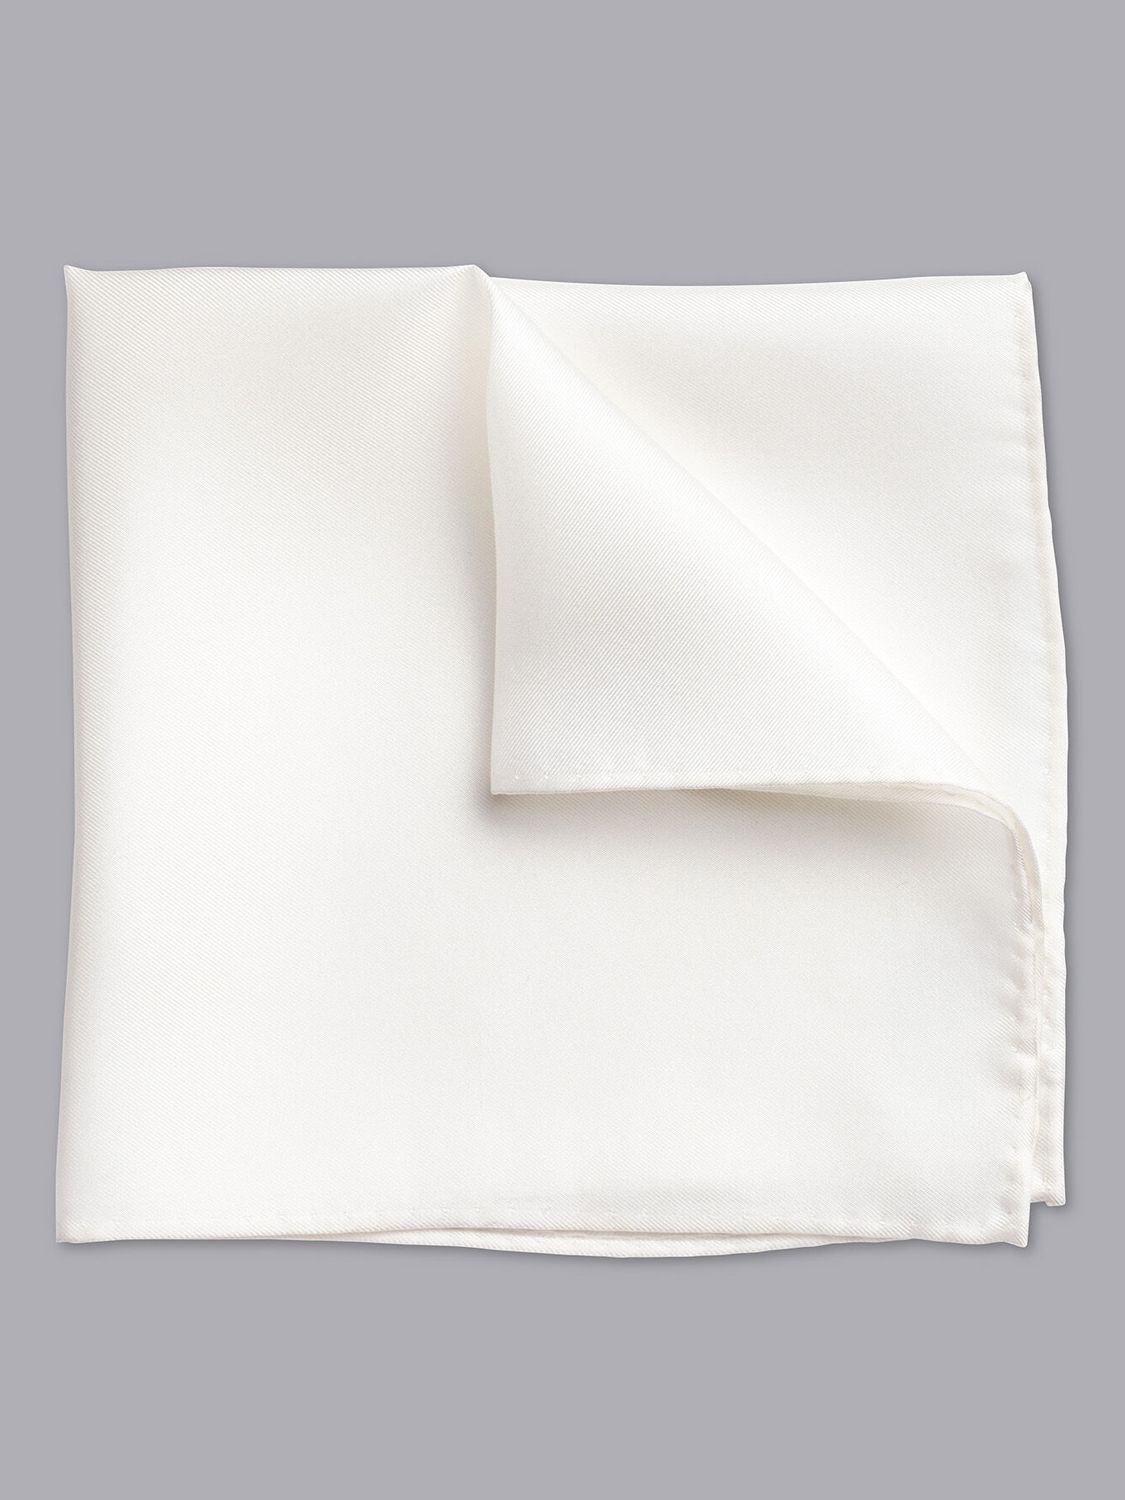 Charles Tyrwhitt Silk Pocket Square, White, One Size